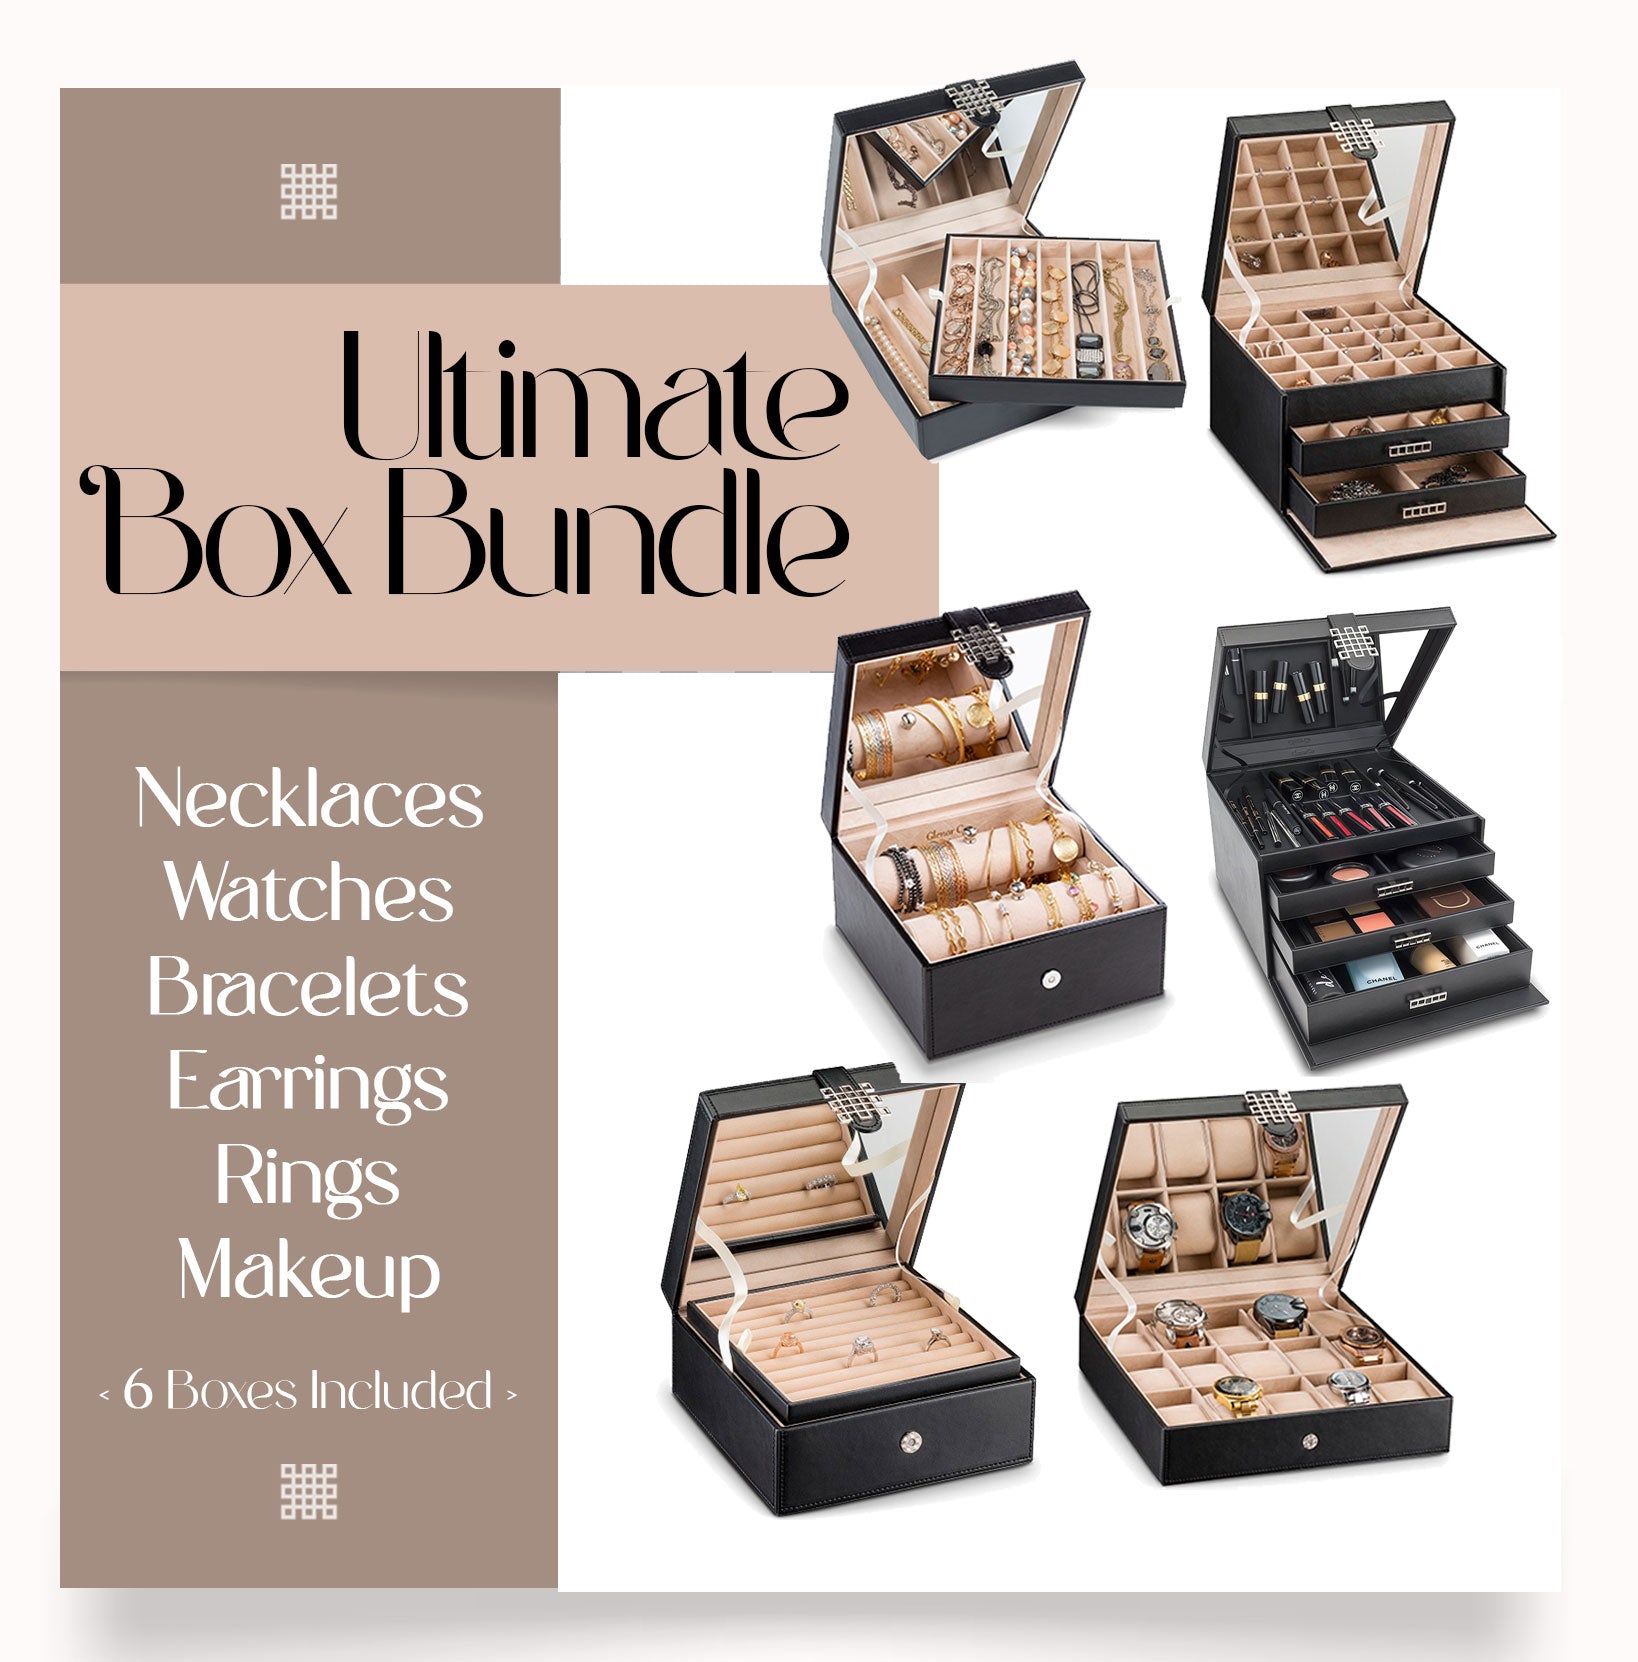 The Jewelry & Makeup Organizer Ultimate Box Bundle